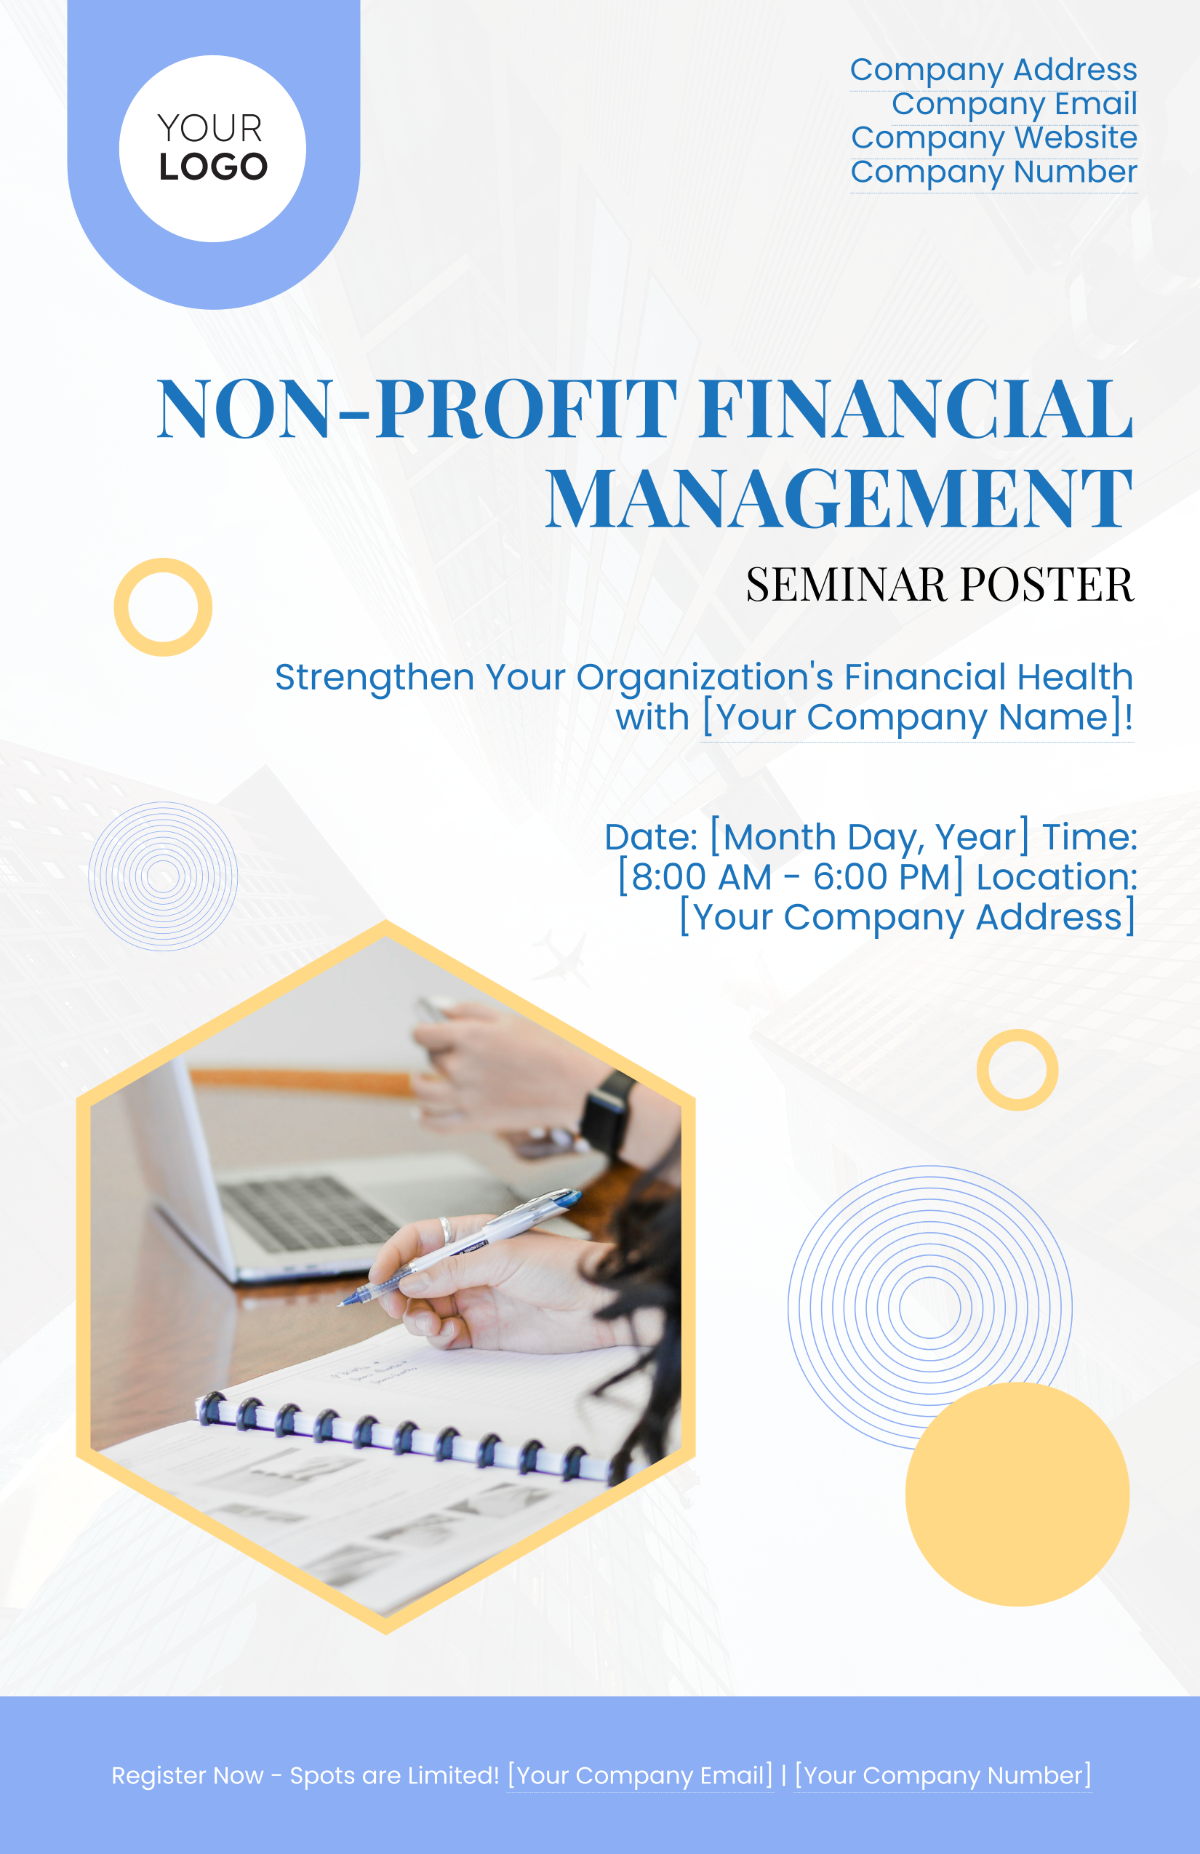 Free Non-Profit Financial Management Seminar Poster Template